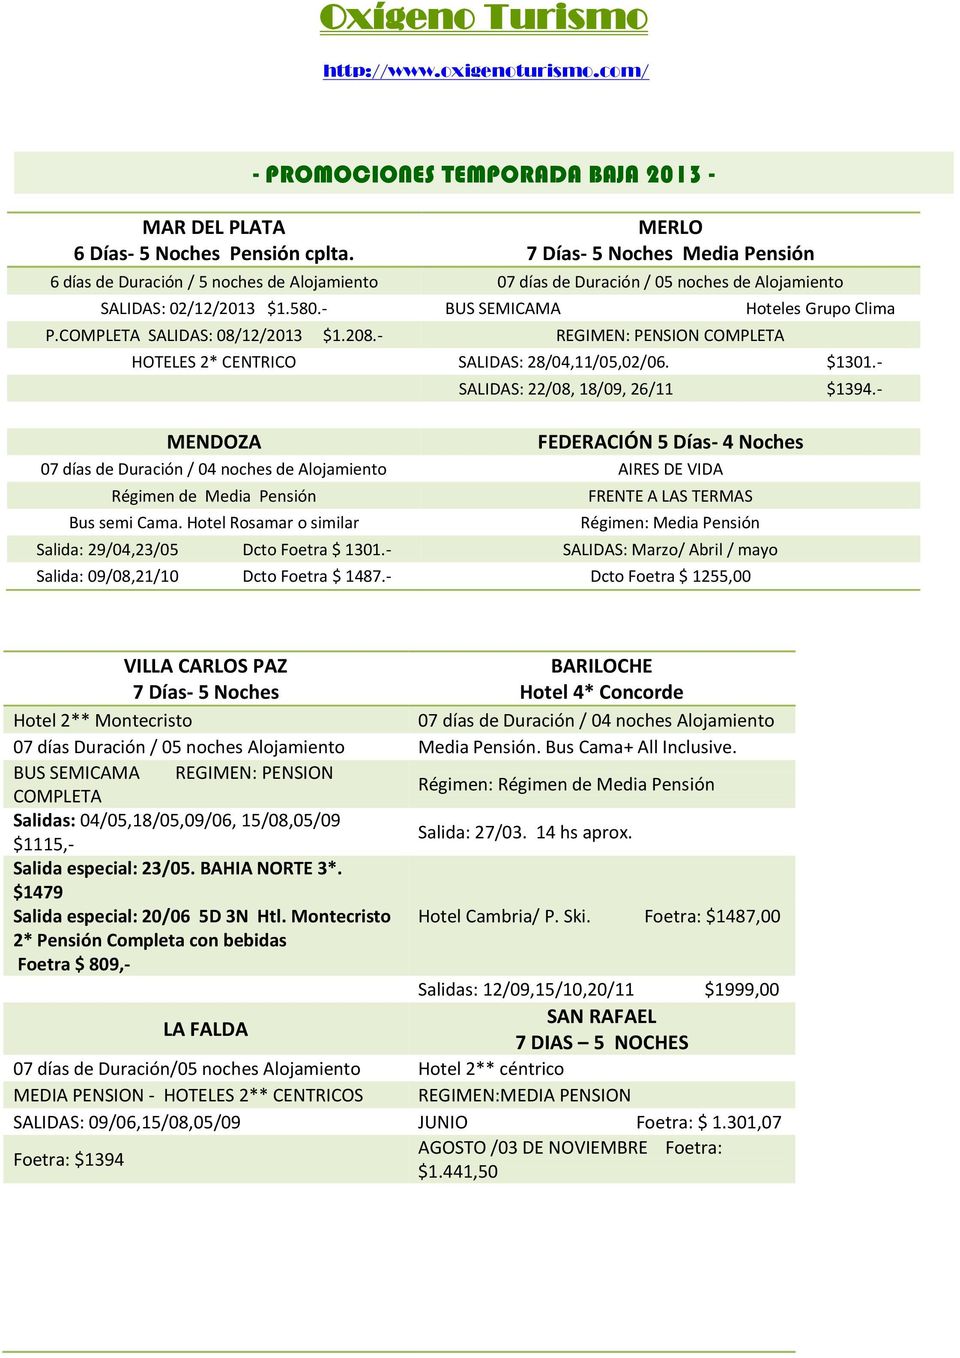 - BUS SEMICAMA Hoteles Grupo Clima P.COMPLETA SALIDAS: 08/12/2013 $1.208.- REGIMEN: PENSION COMPLETA HOTELES 2* CENTRICO SALIDAS: 28/04,11/05,02/06. $1301.- SALIDAS: 22/08, 18/09, 26/11 $1394.